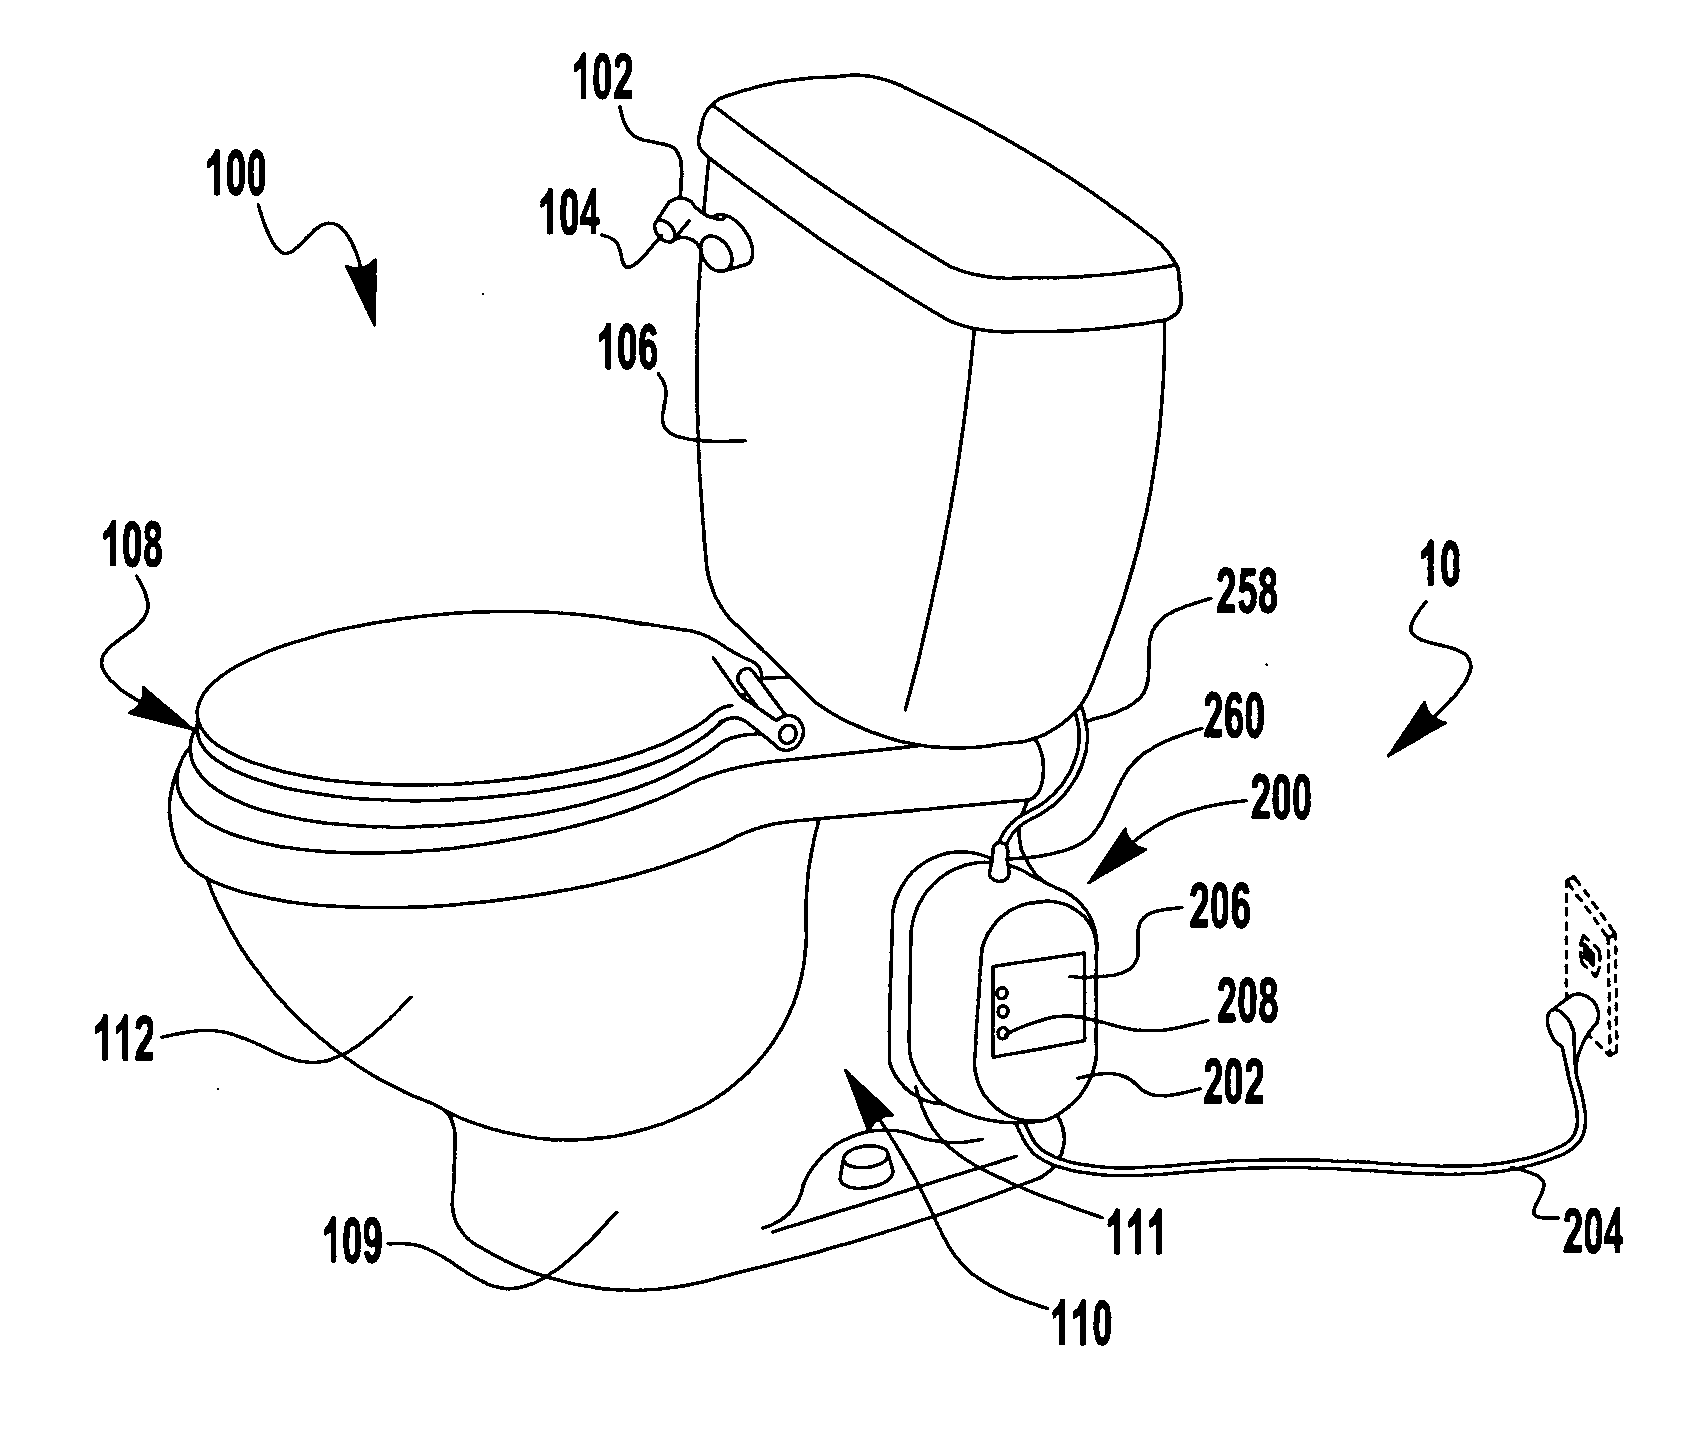 Toilet ventilation system